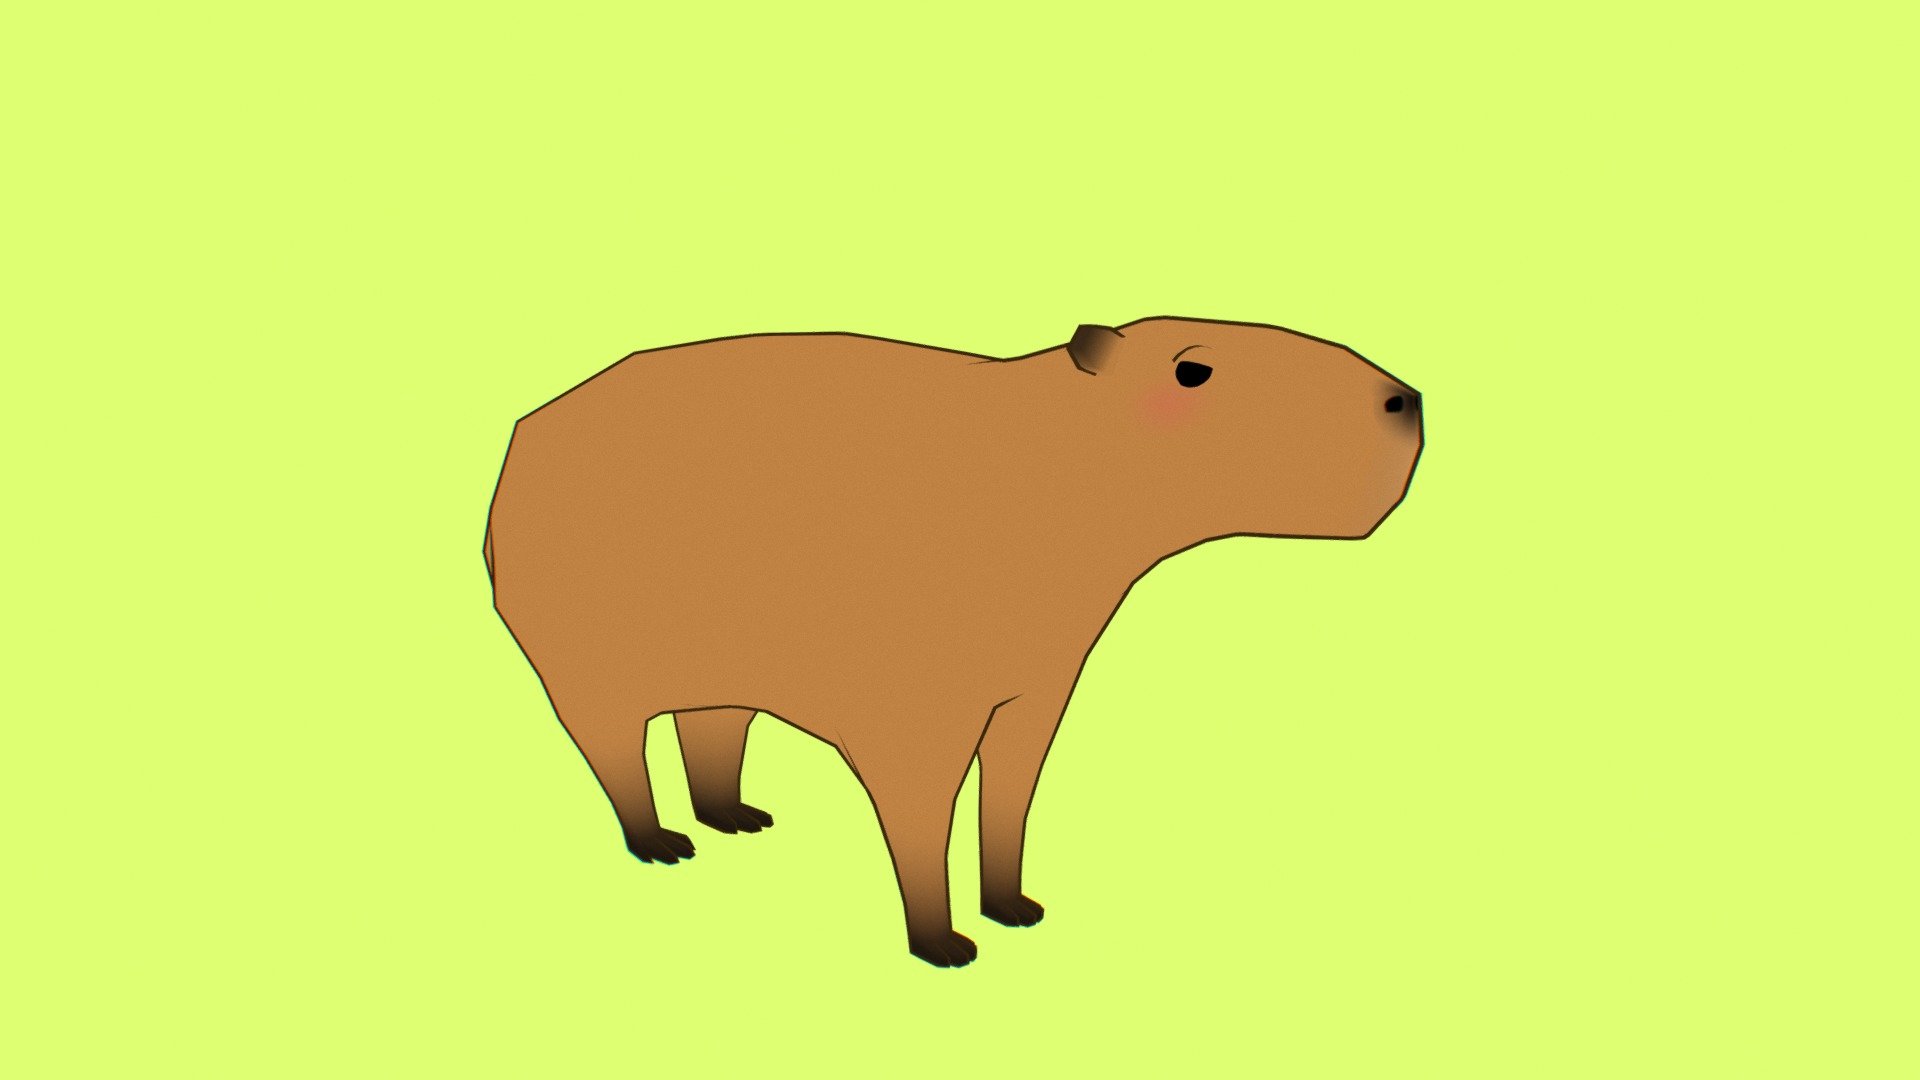 Cute Capybaras wallpaper by blvuexmiku  Download on ZEDGE  be10